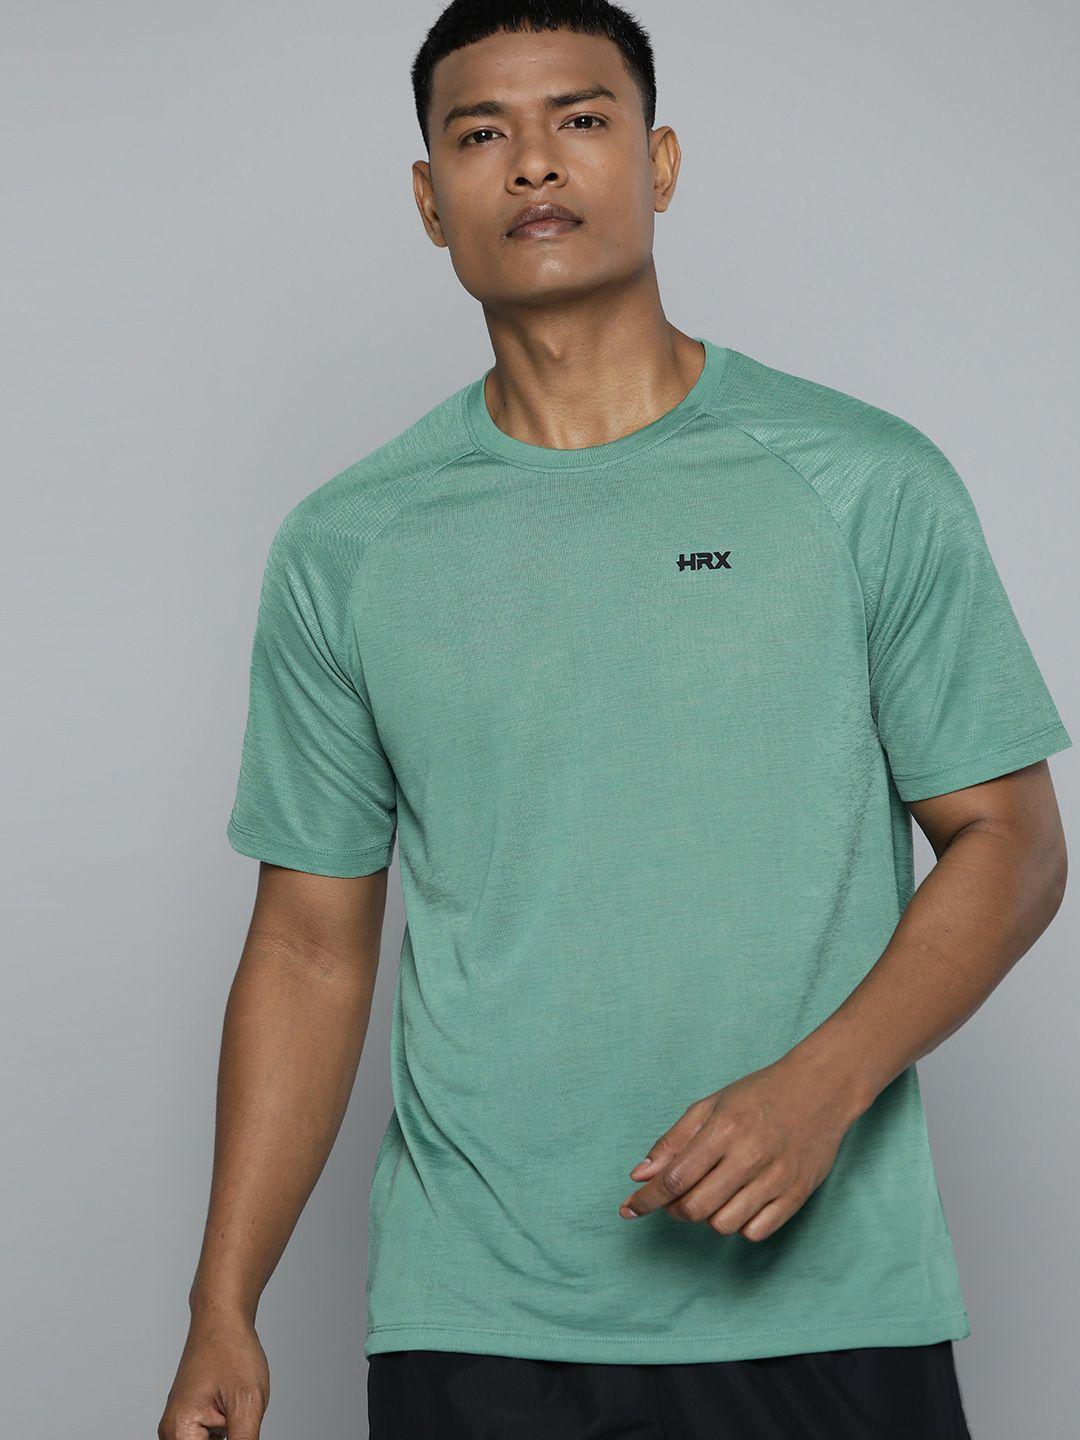 hrx by hrithik roshan men brand logo printed rapid-dry reflective sports t-shirt